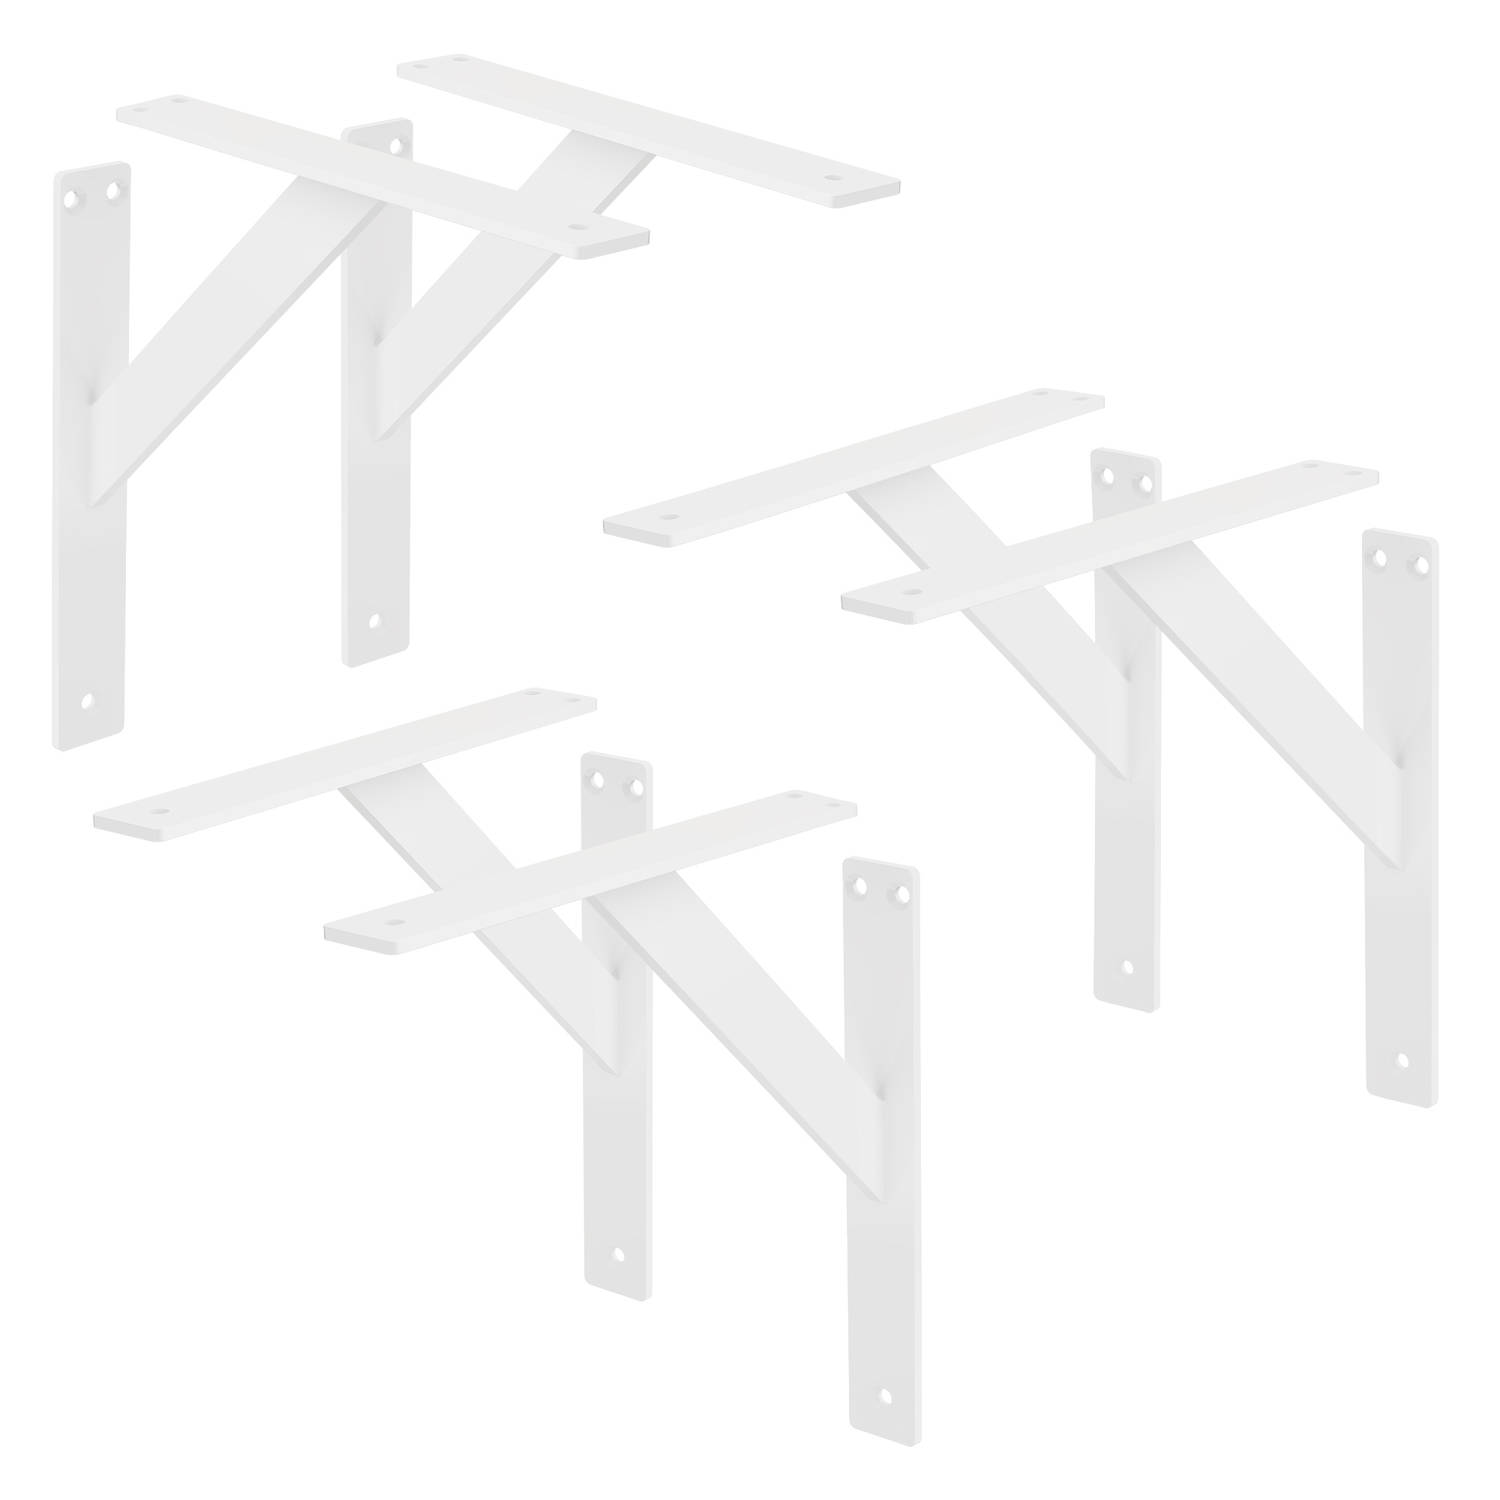 ML-Design 6 stuks plankdrager 240x240 mm, wit, aluminium, zwevende plankdrager, plankdrager, wanddrager voor plankdrager, plankdrager voor wandmontage, wandplankdrager plankdrager